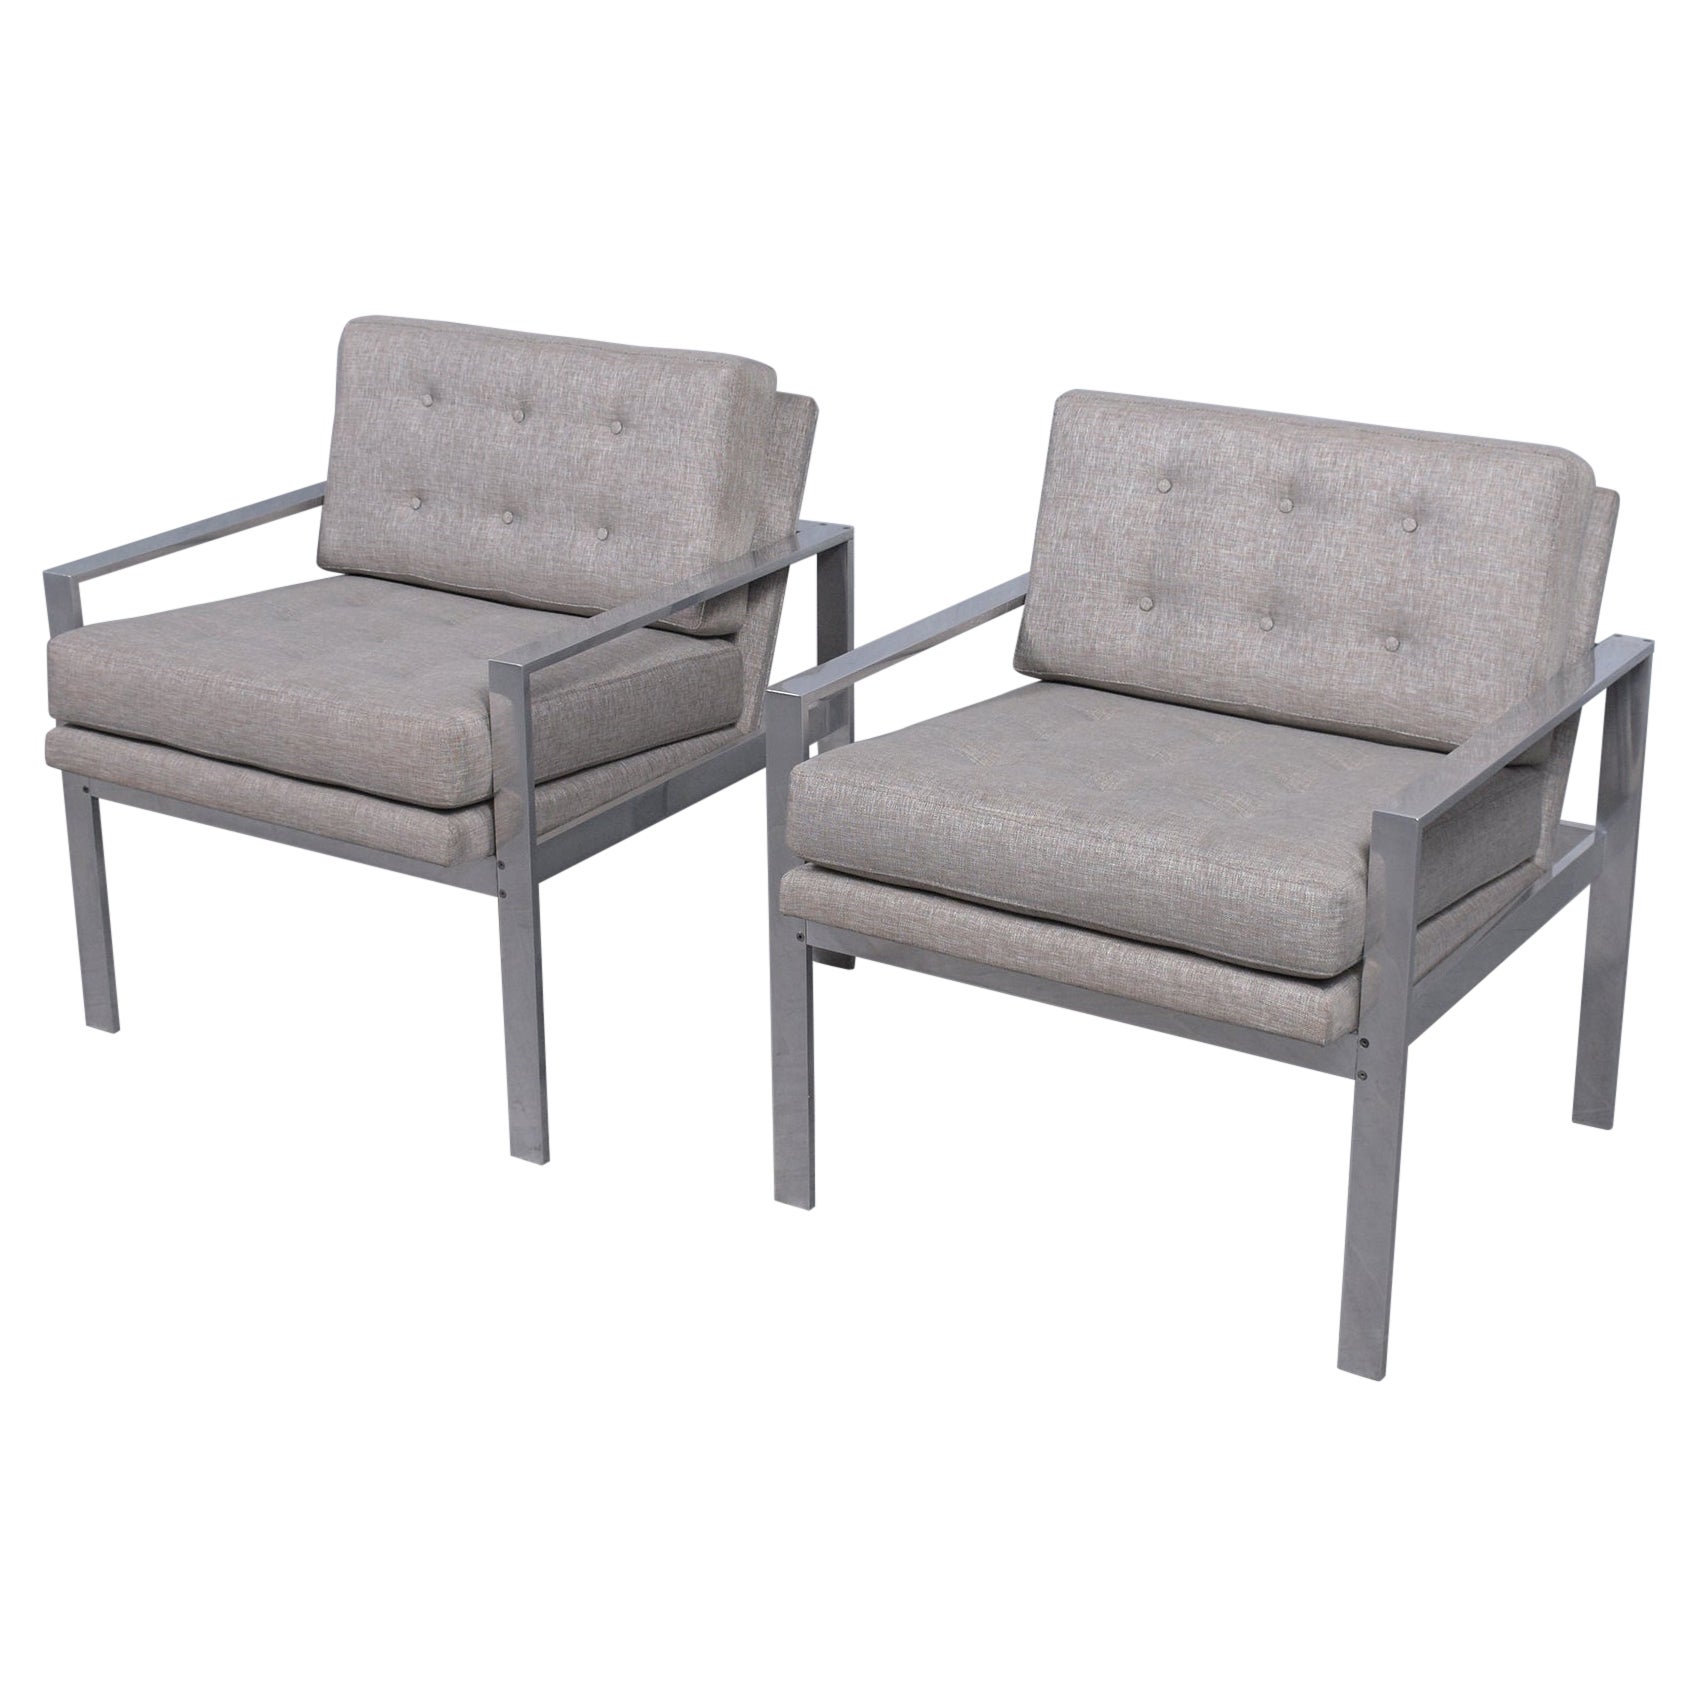 Restored Milo Baughman Lounge Chairs: Mid-Century Elegance Meets Modern Comfort